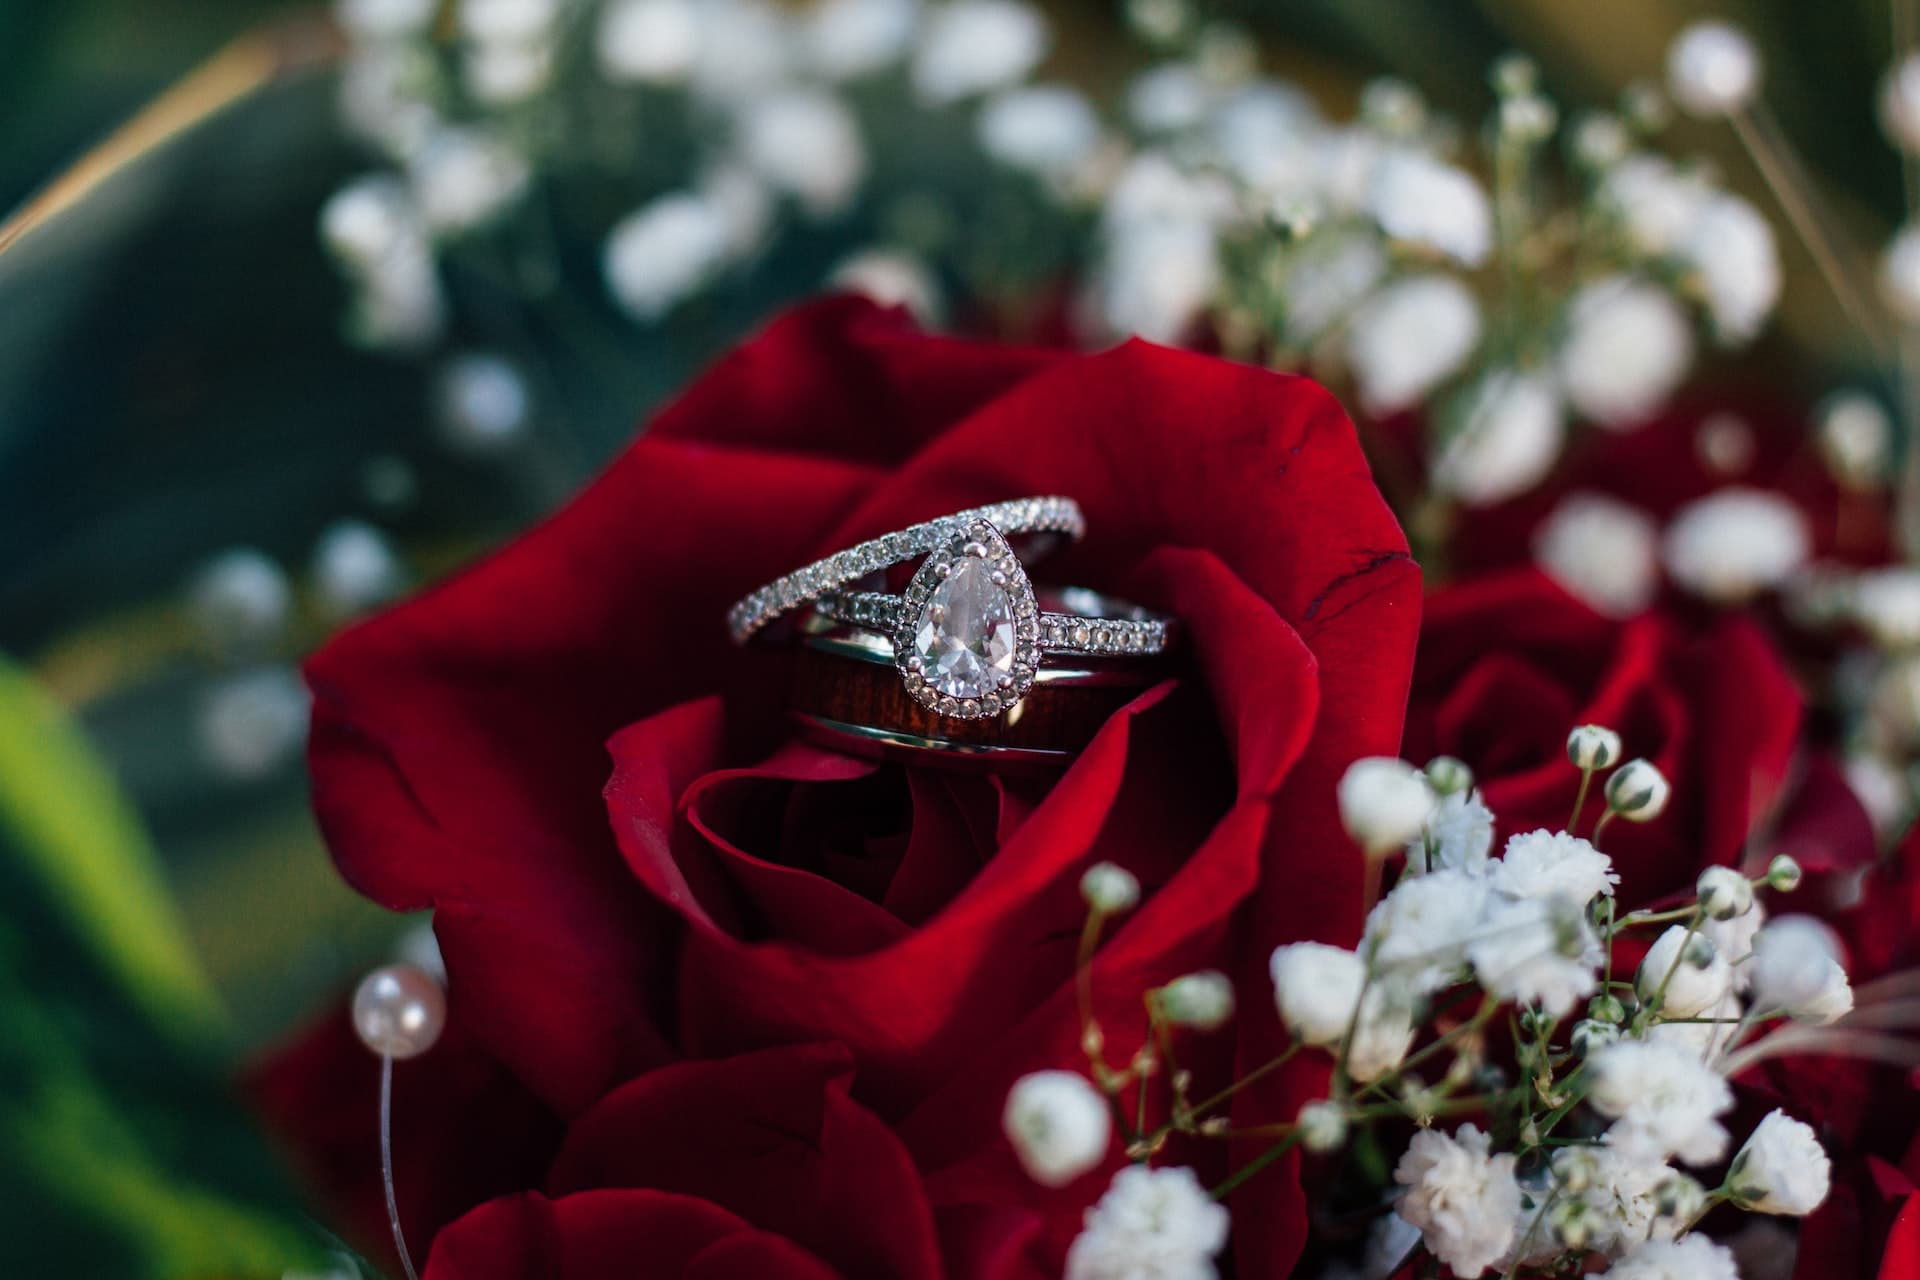 pear cut diamond engagement ring on rose